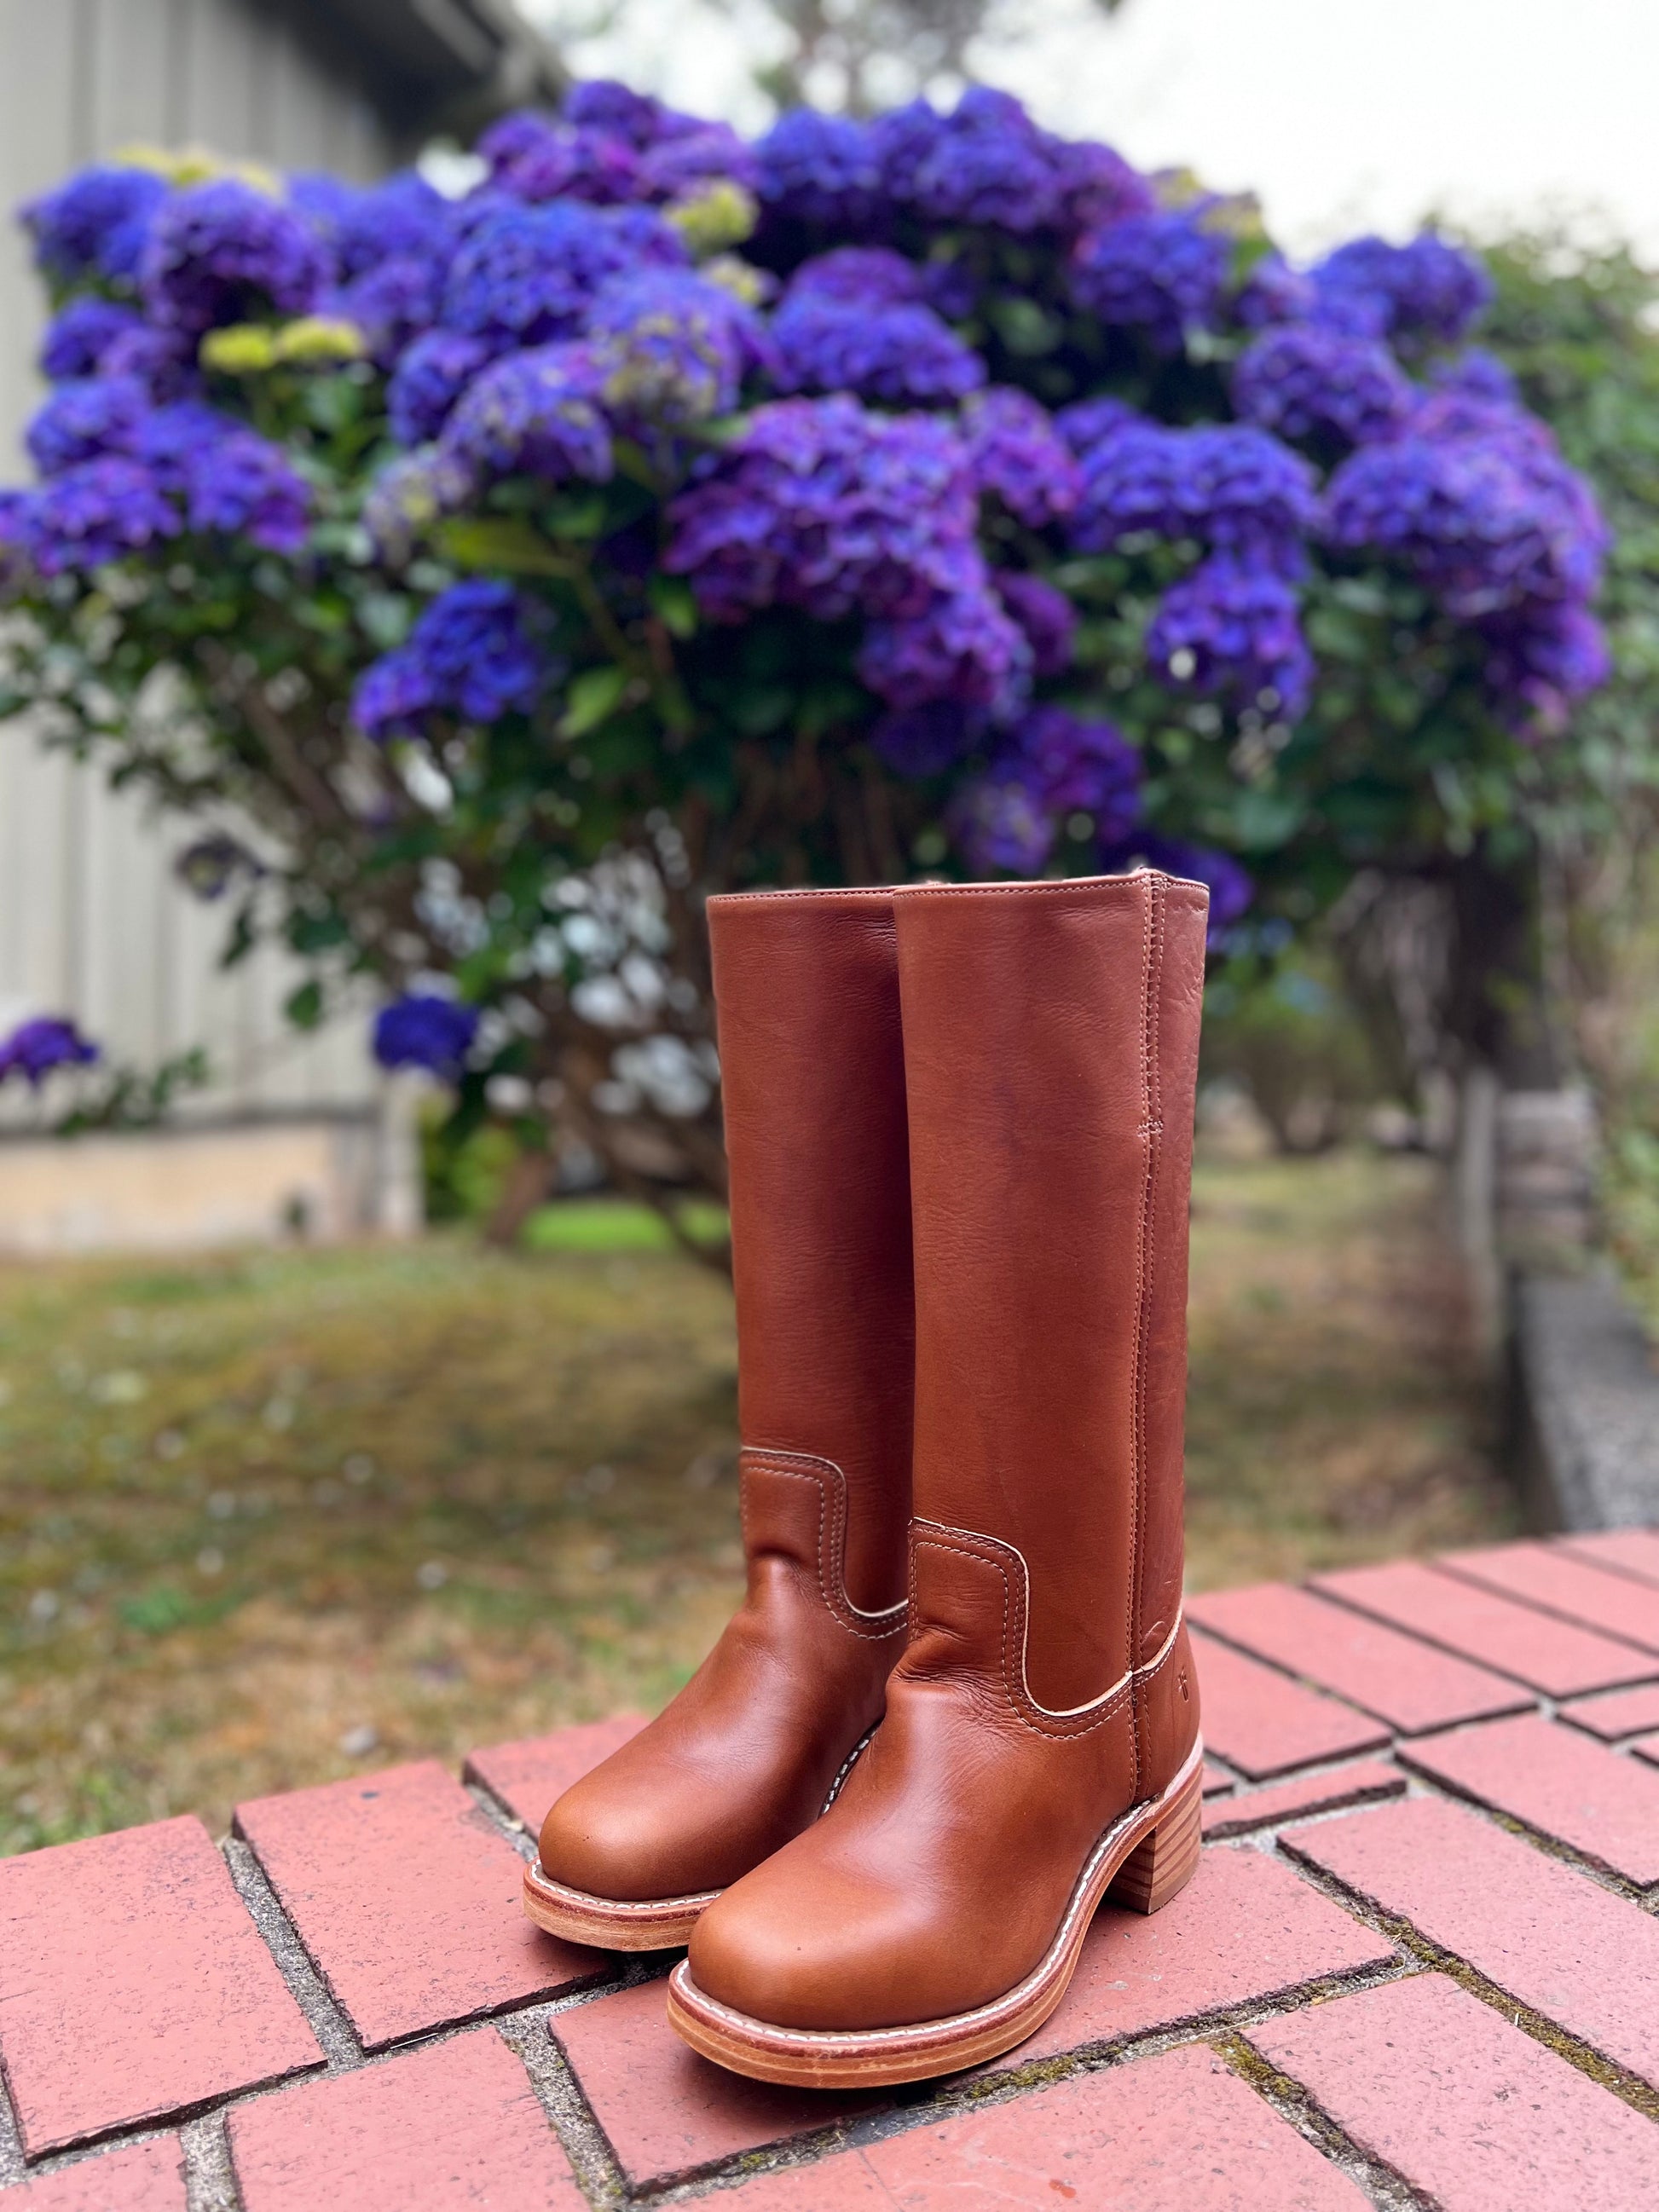 Frye Campus Leather Boot - Saddle flower background